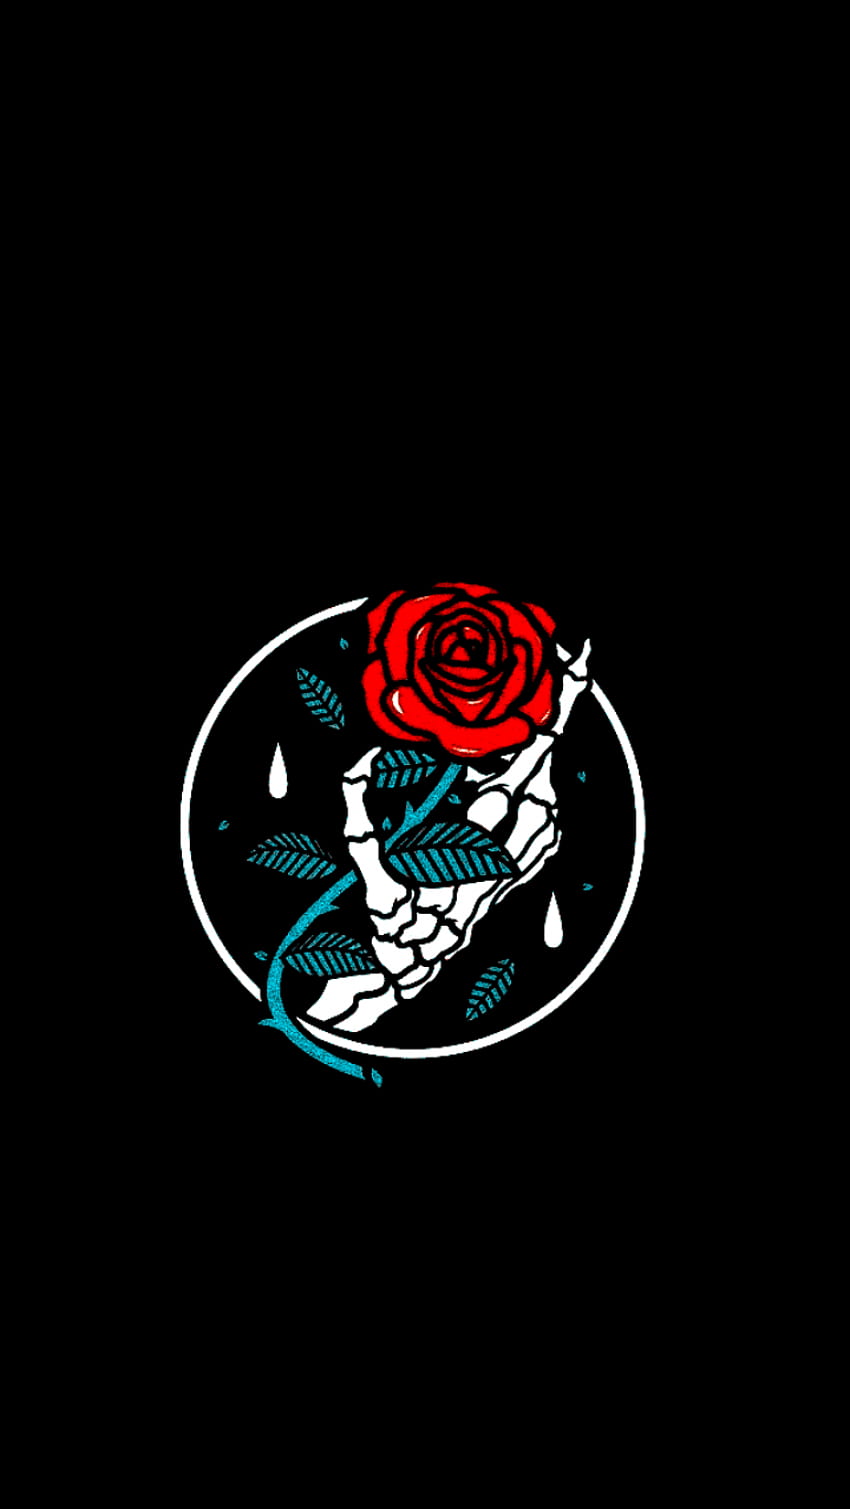 Aesthetic wallpaper for phone skeleton hand holding a rose - Emo